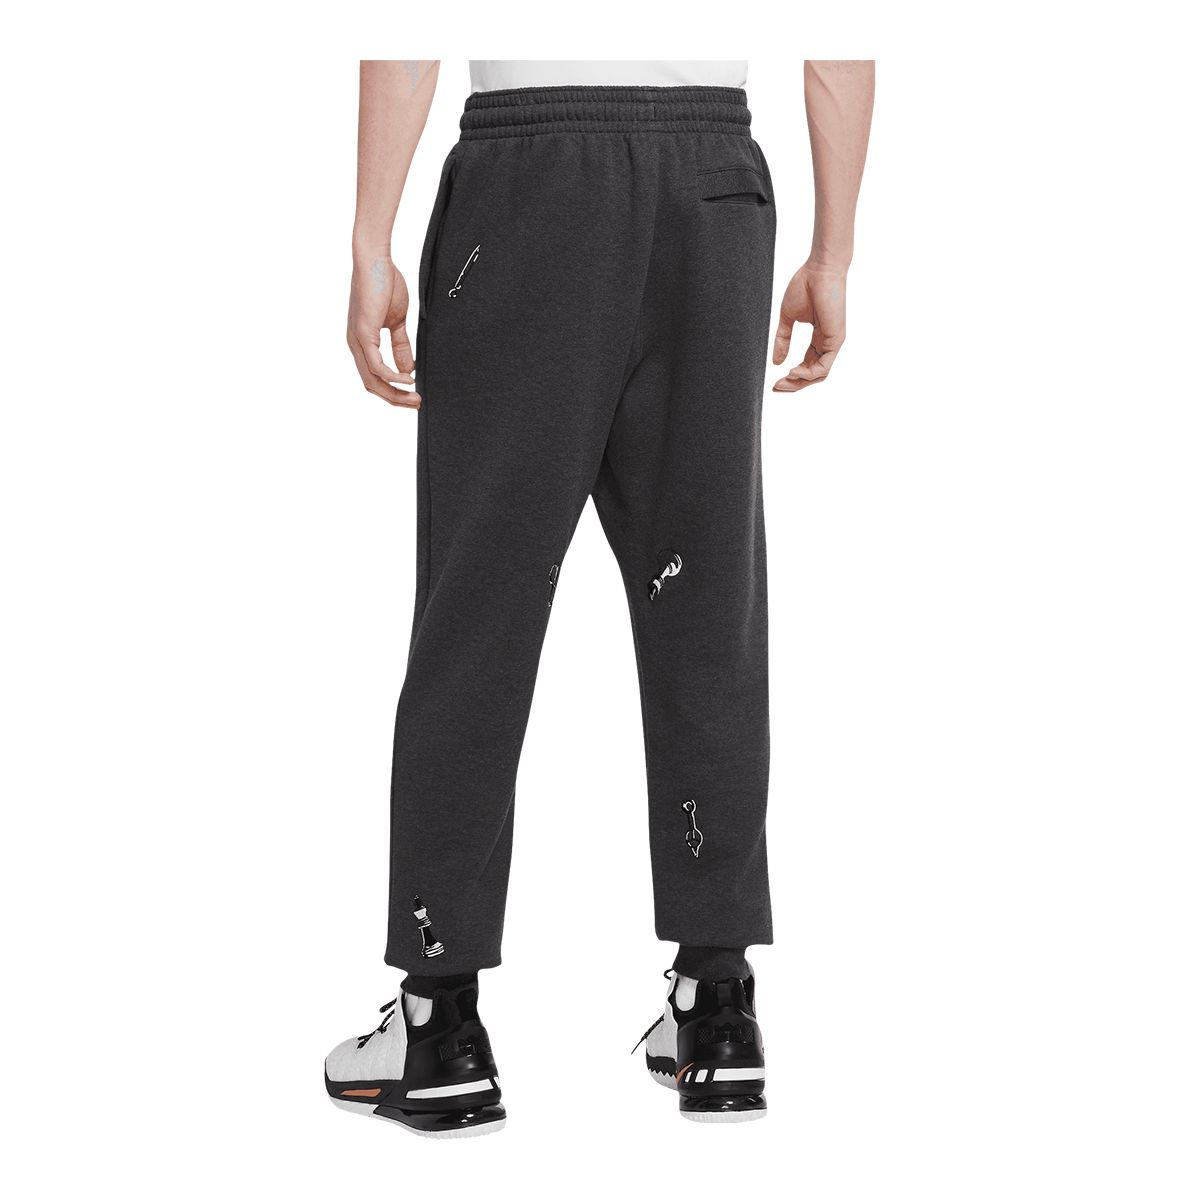 Men's LeBron James Nike Black Fleece Performance Pants